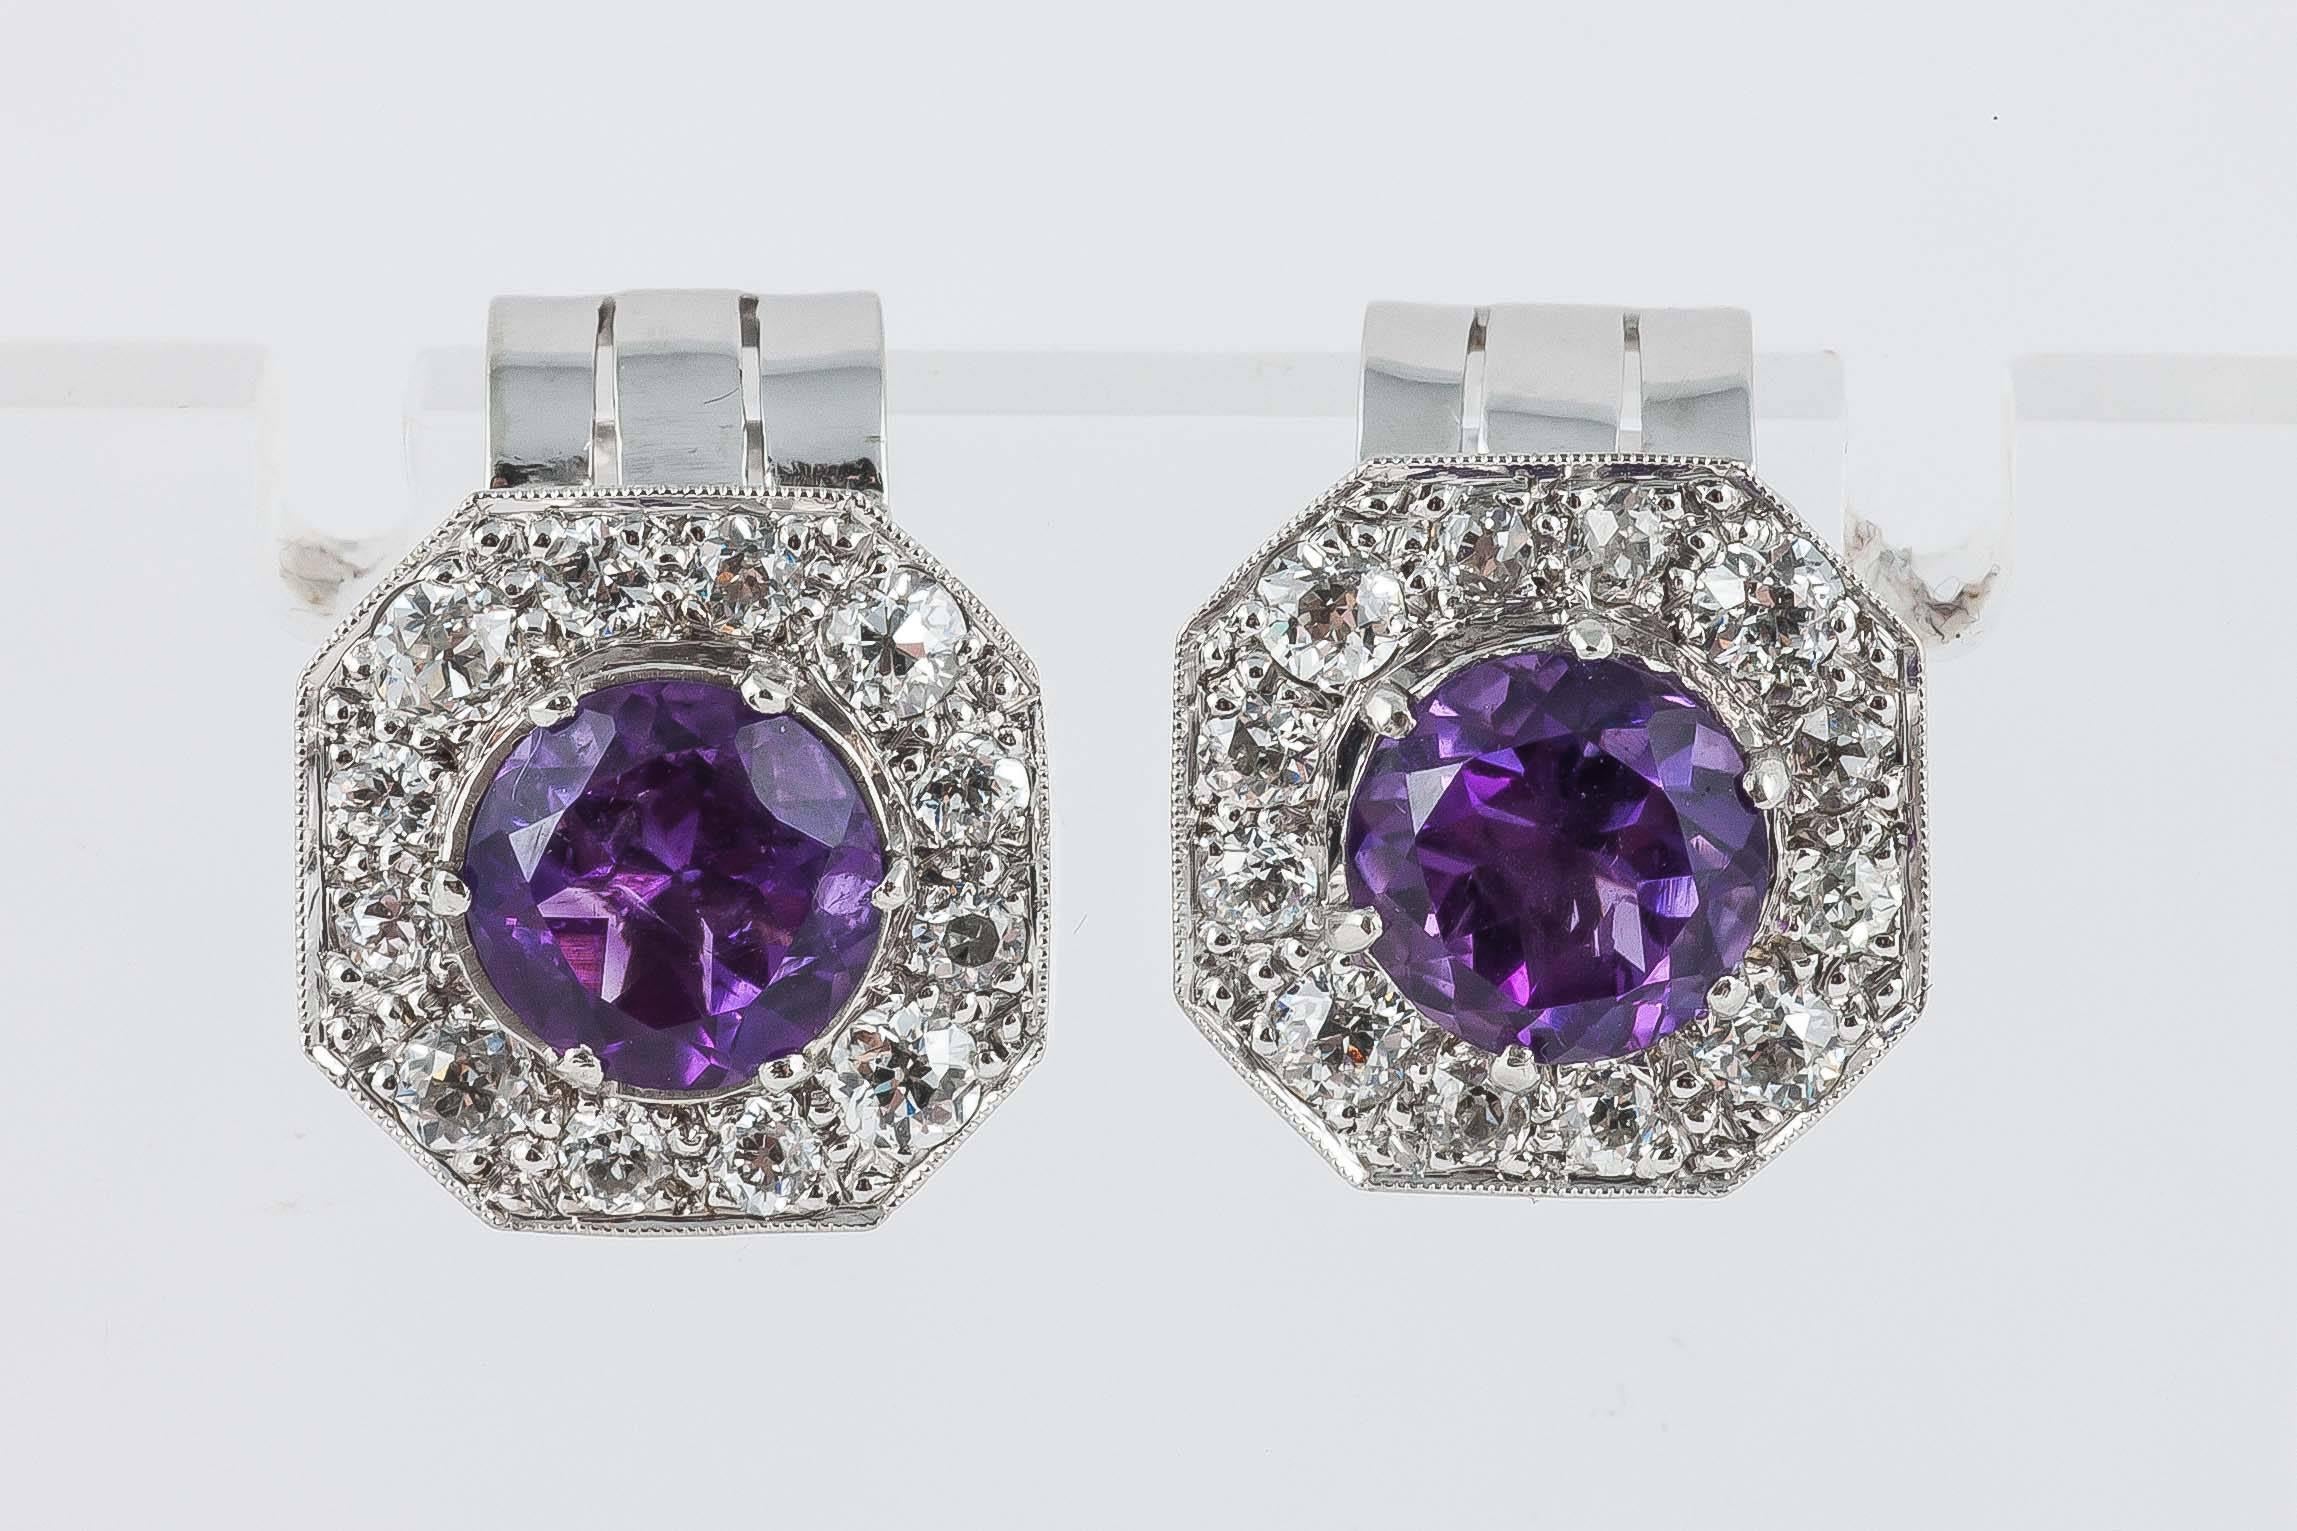 Octagonal Diamond earrings set with fine Amethyst in Platinum